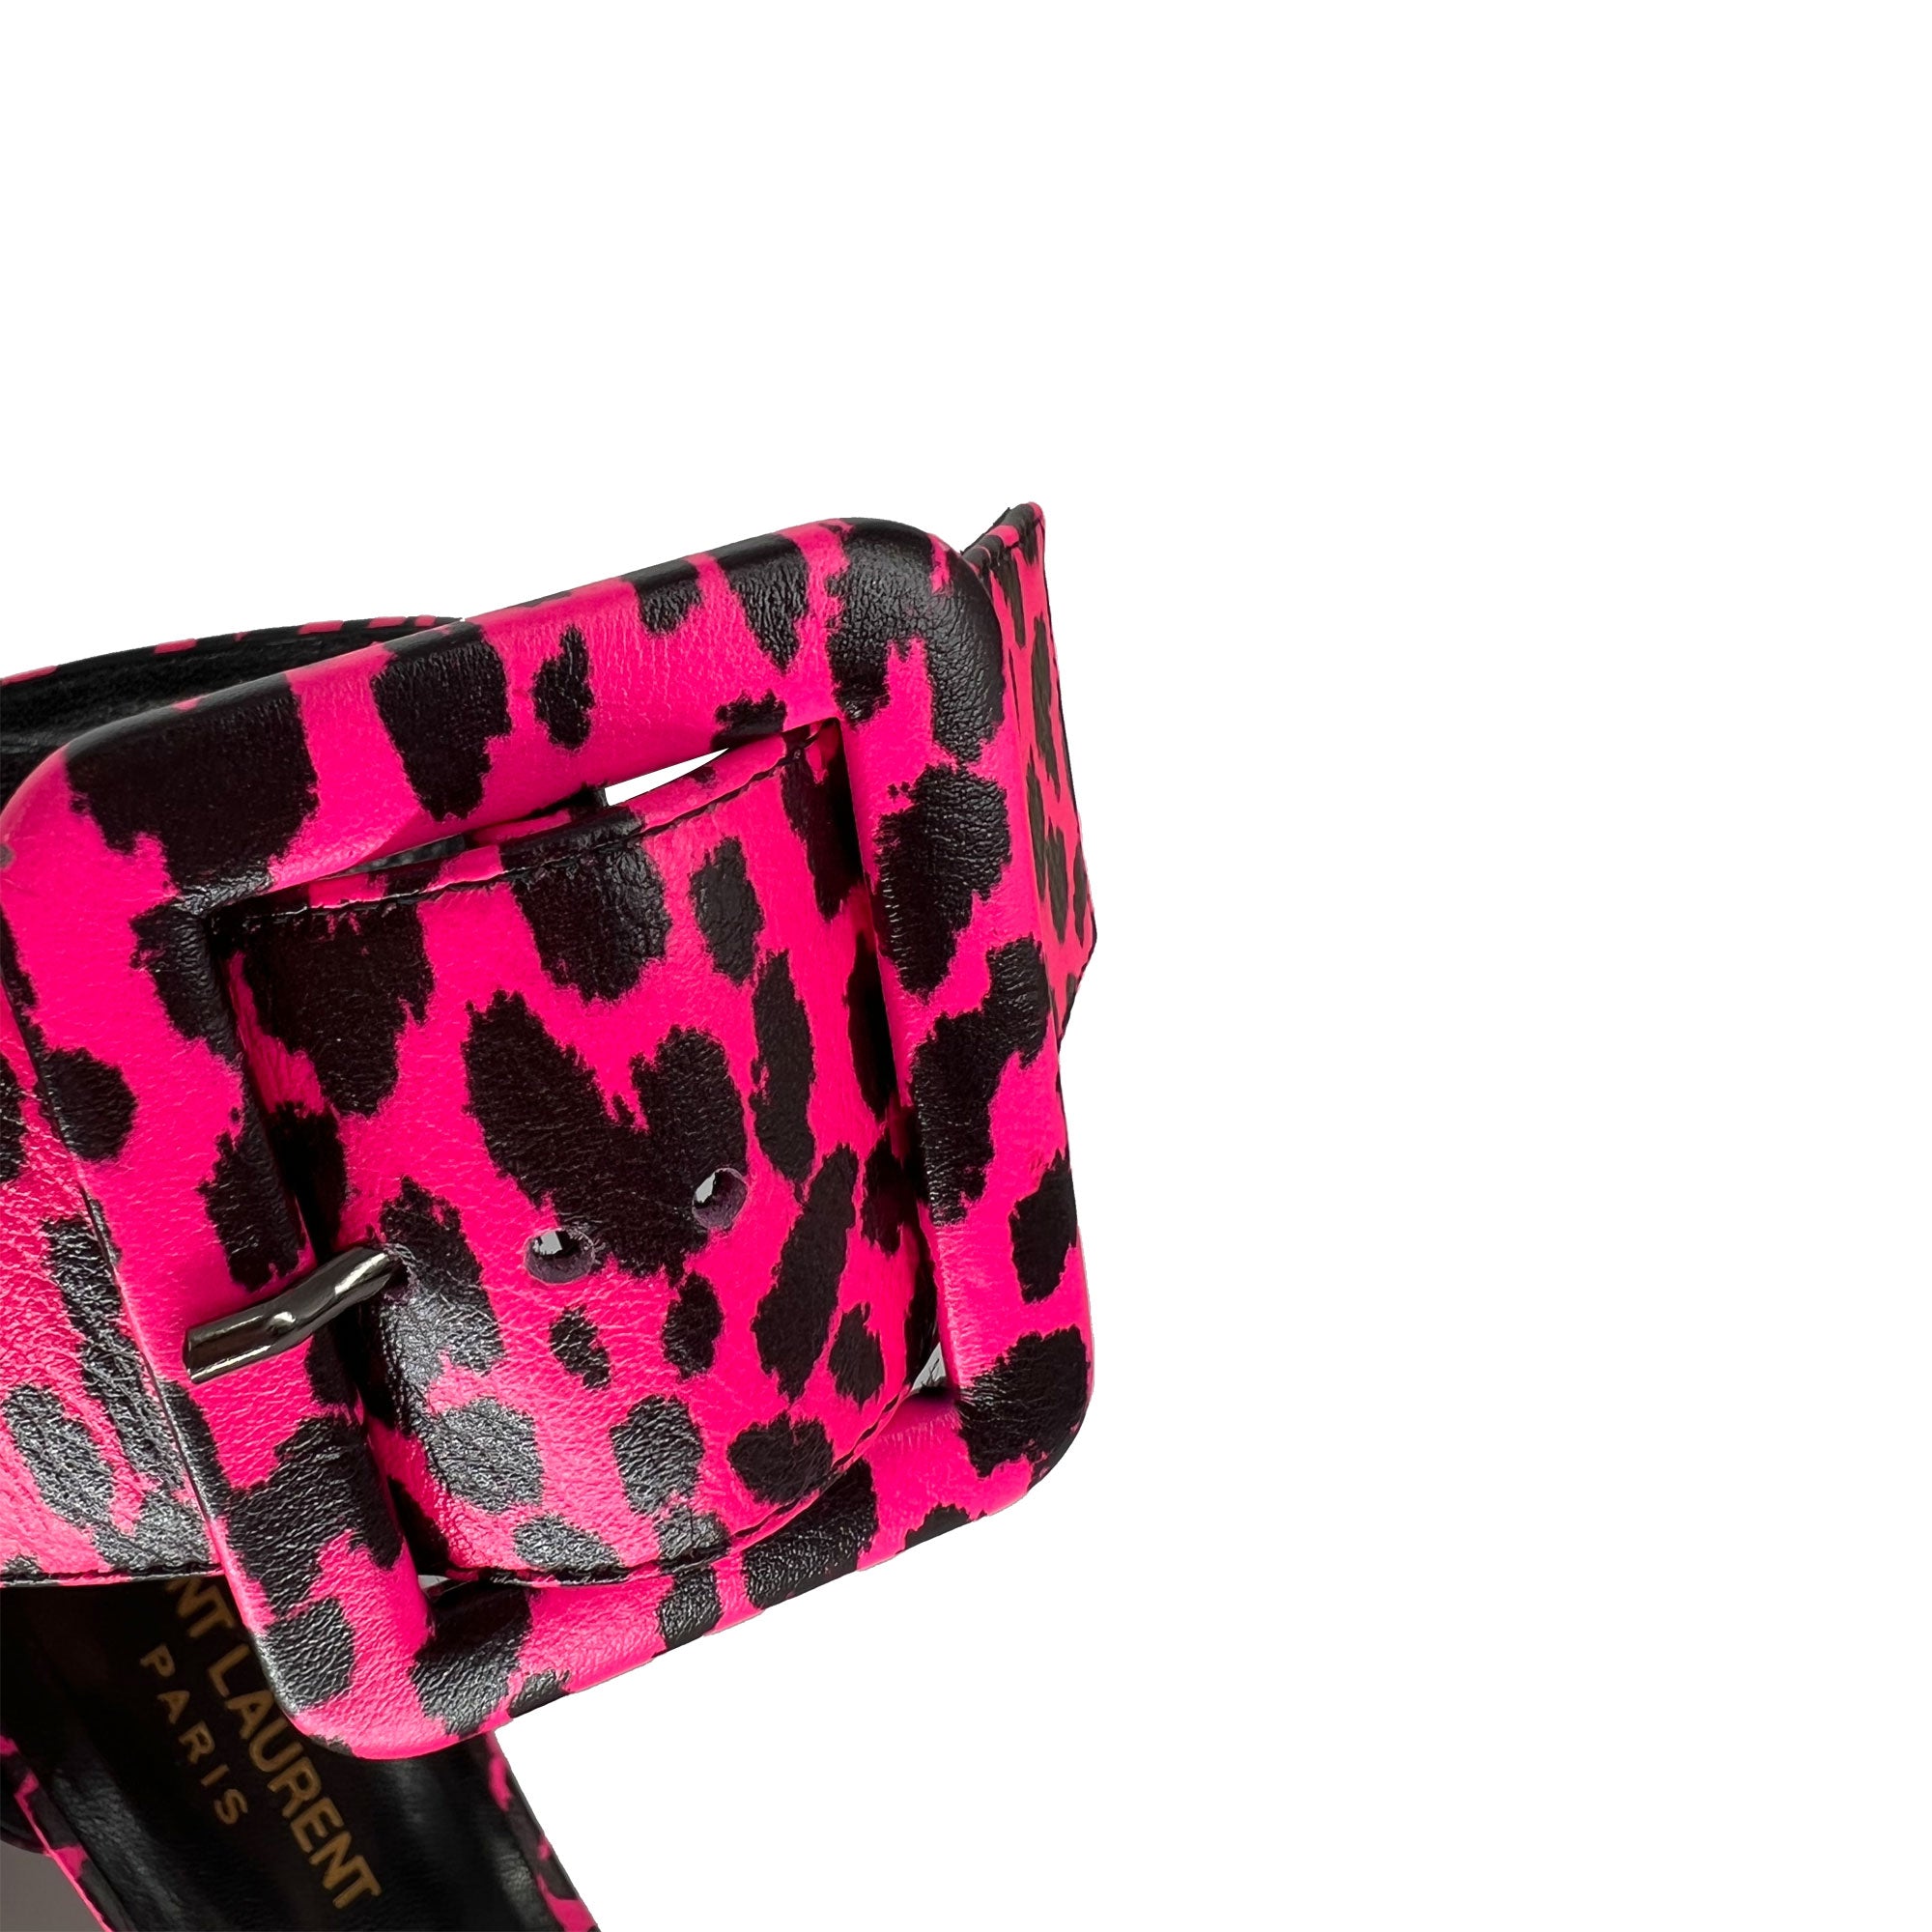 Yves Saint Laurent pink animal print sandals